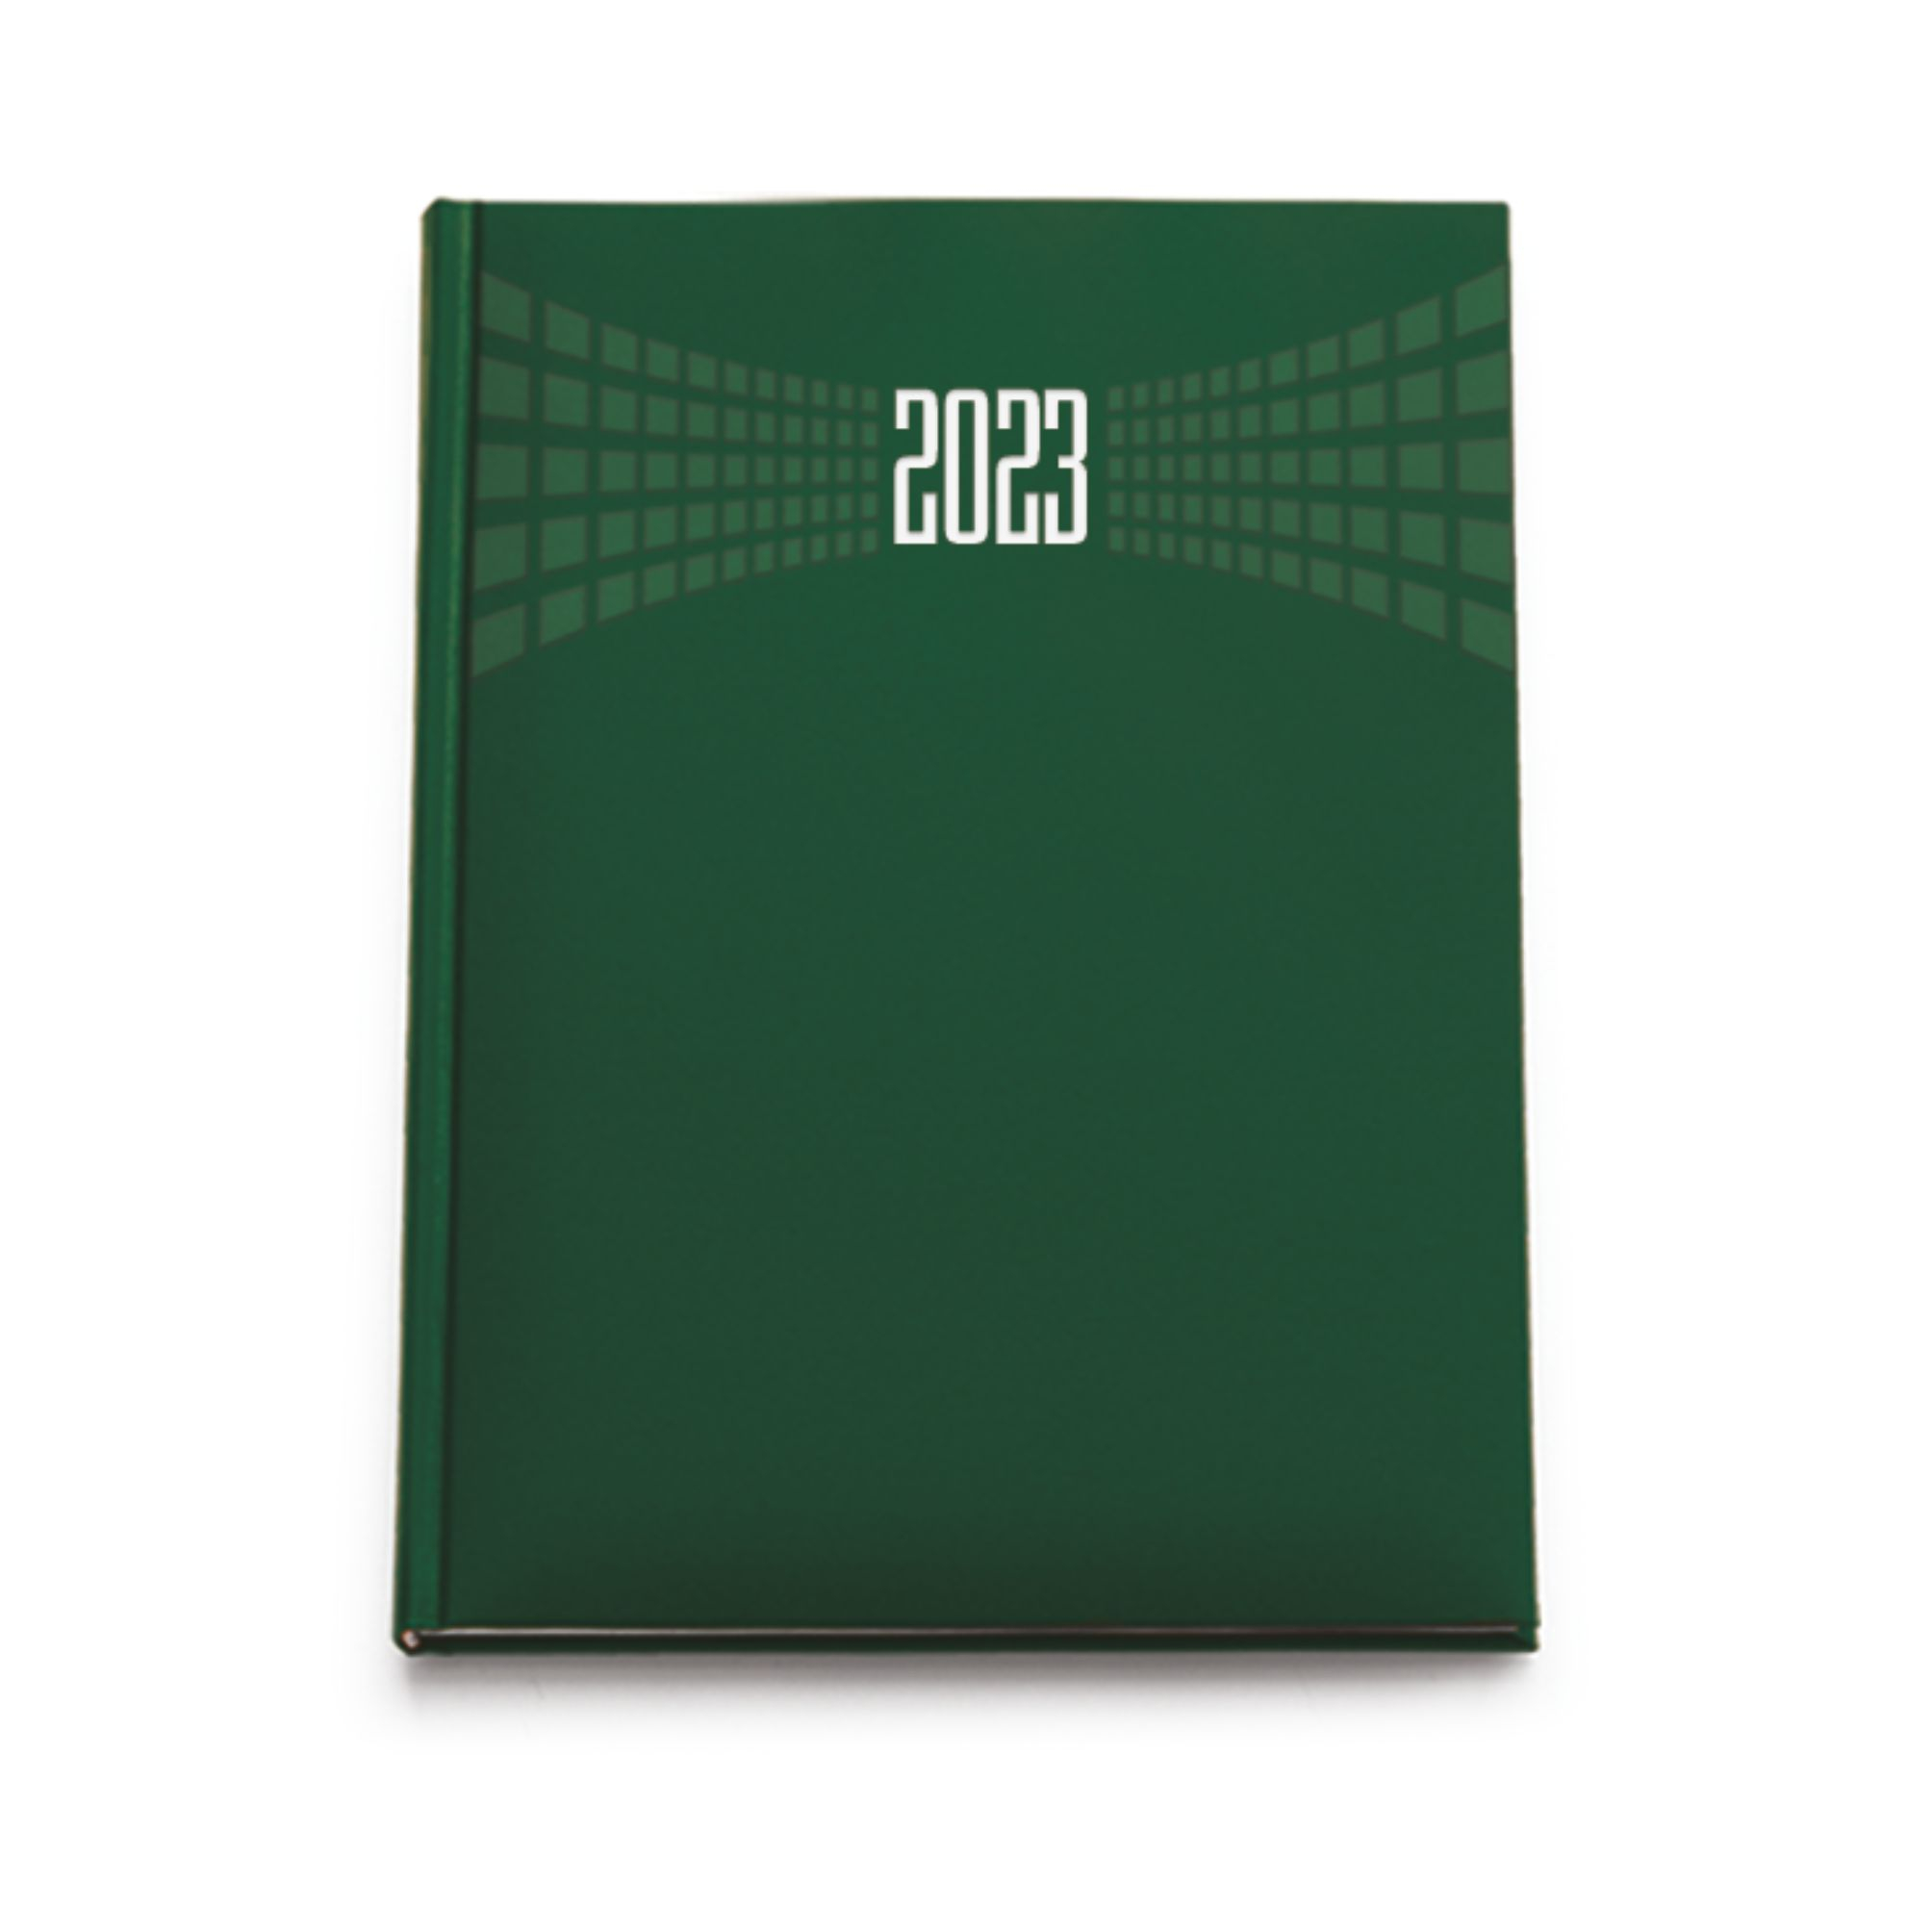 0178-agenda-giornaliera-matra-cm-15x21-verde.jpg